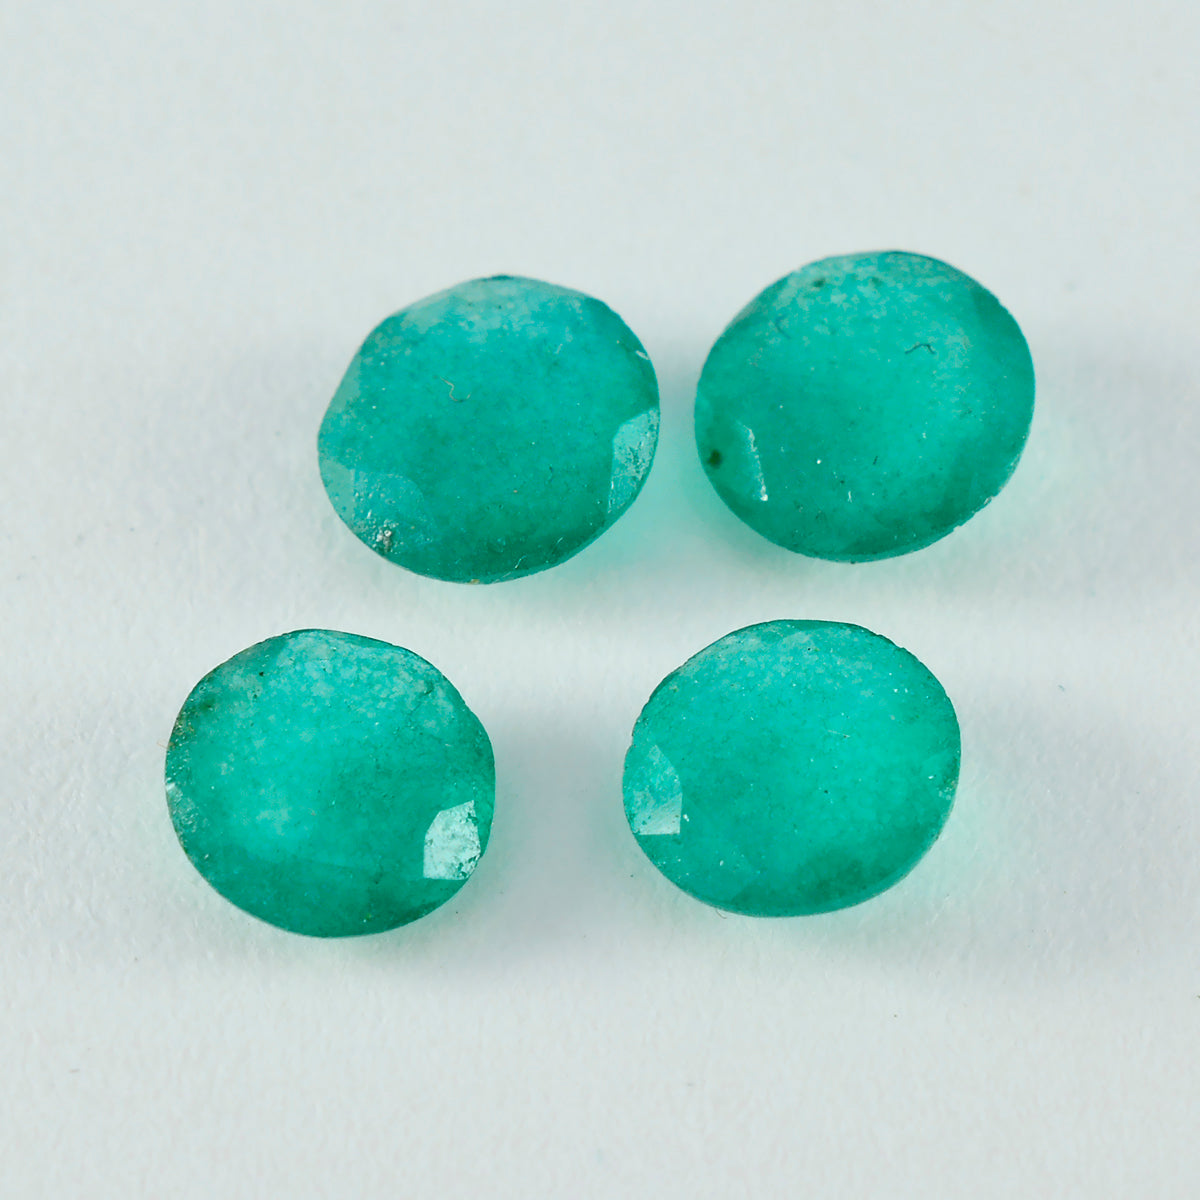 riyogems 1 st naturlig grön jaspis fasetterad 10x10 mm rund form utmärkt kvalitet pärla